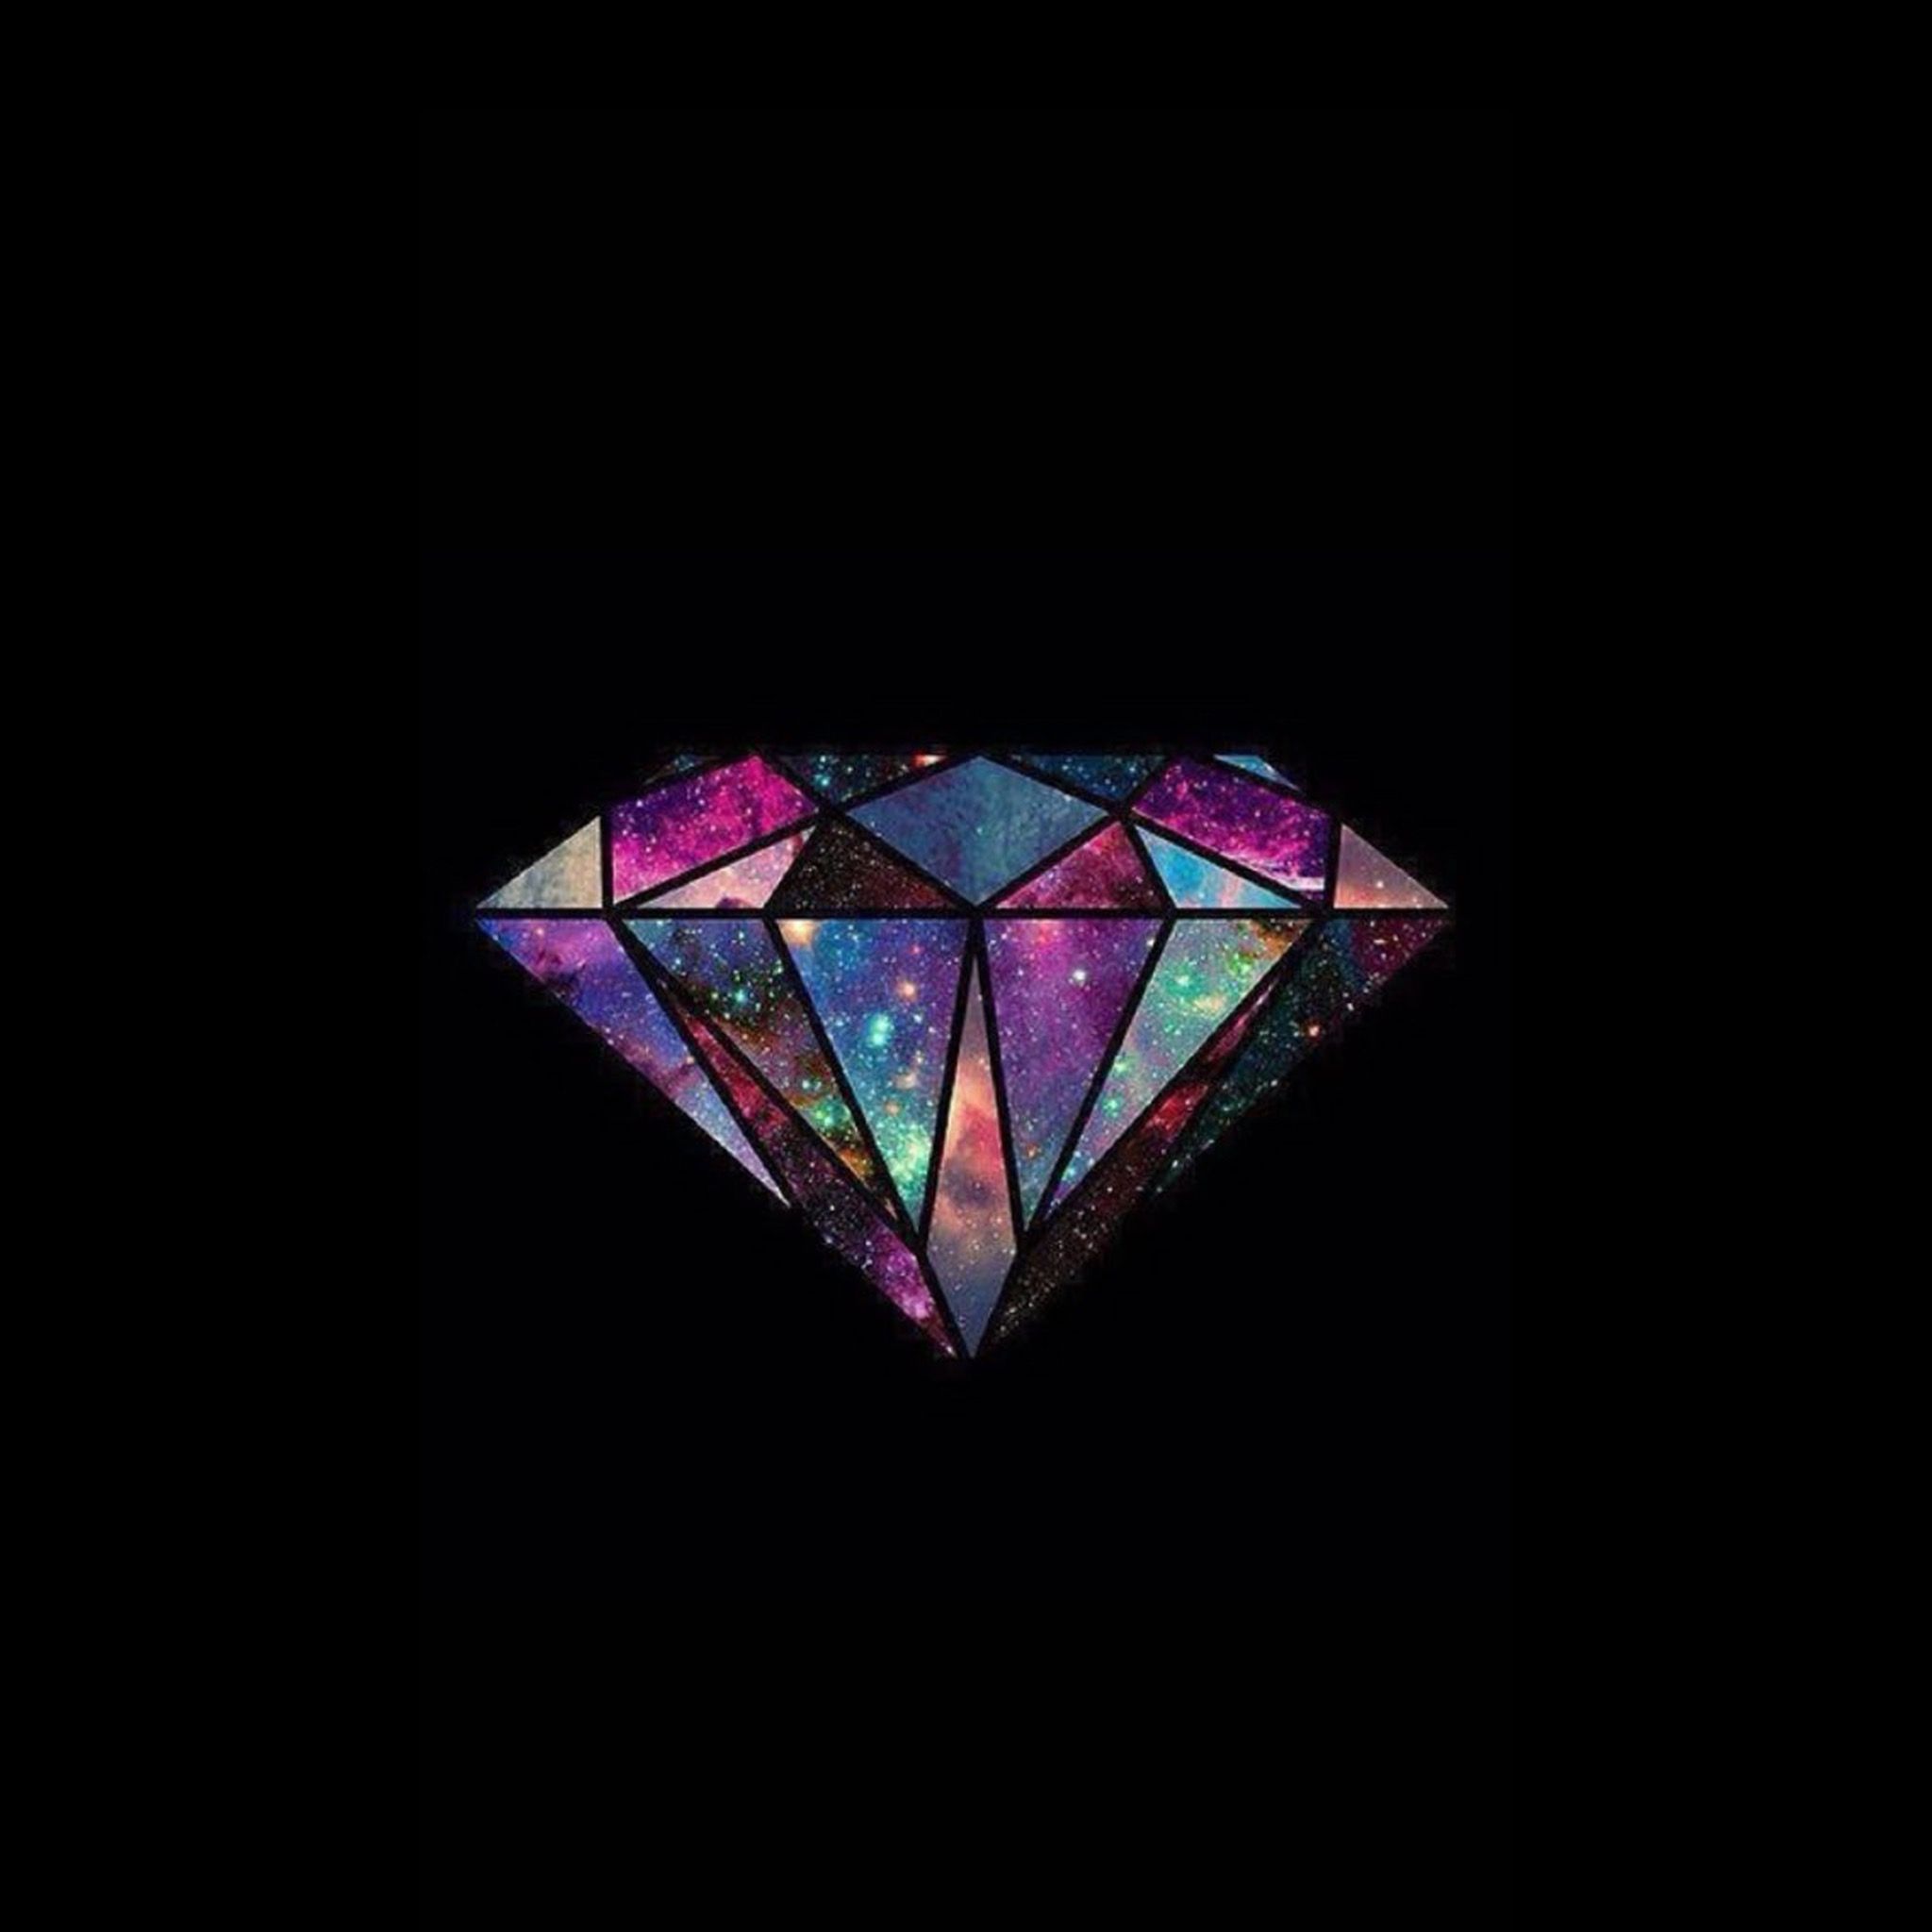  Diamant Hintergrundbild 2048x2048. Galaxy diamond wallpaper. Diamond wallpaper iphone, Diamond wallpaper, iPhone wallpaper